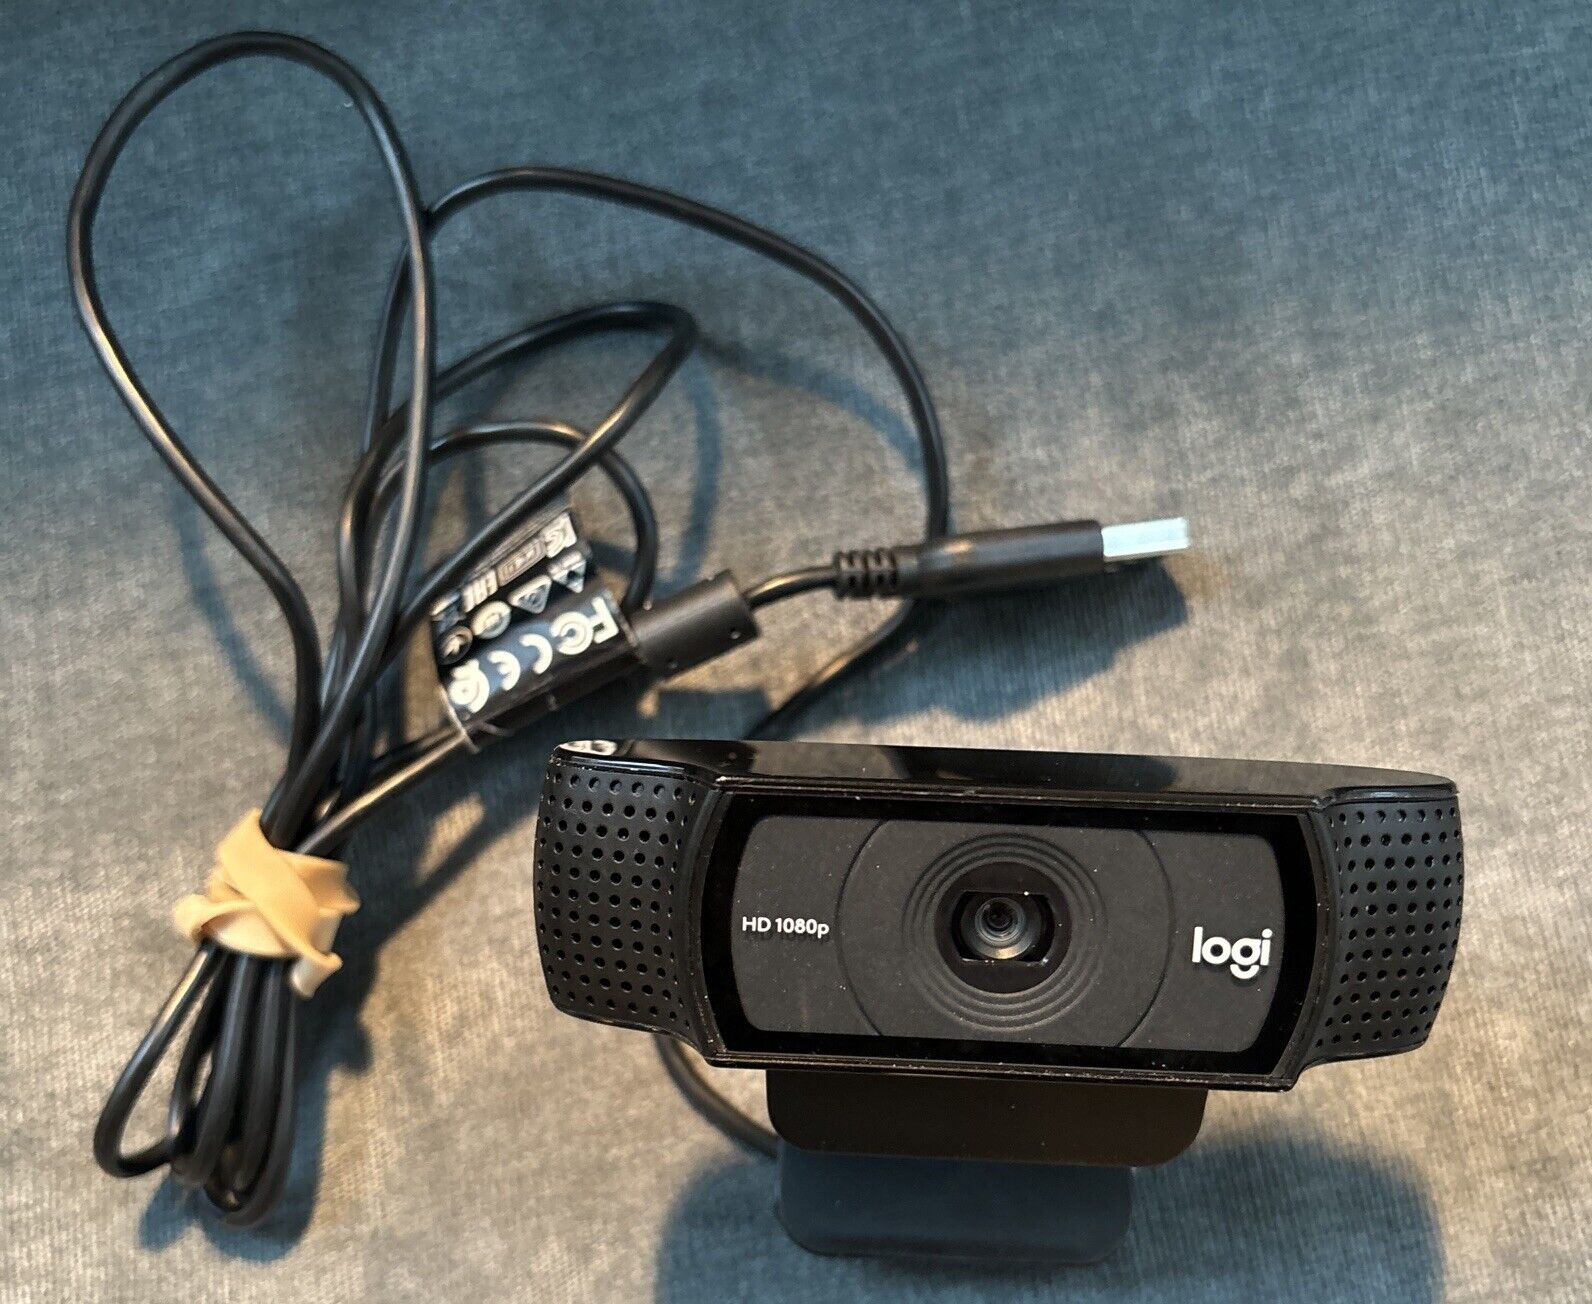 Logitech Logi C922 Pro Stream Webcam Camera HD 1080P Streaming Recording Black